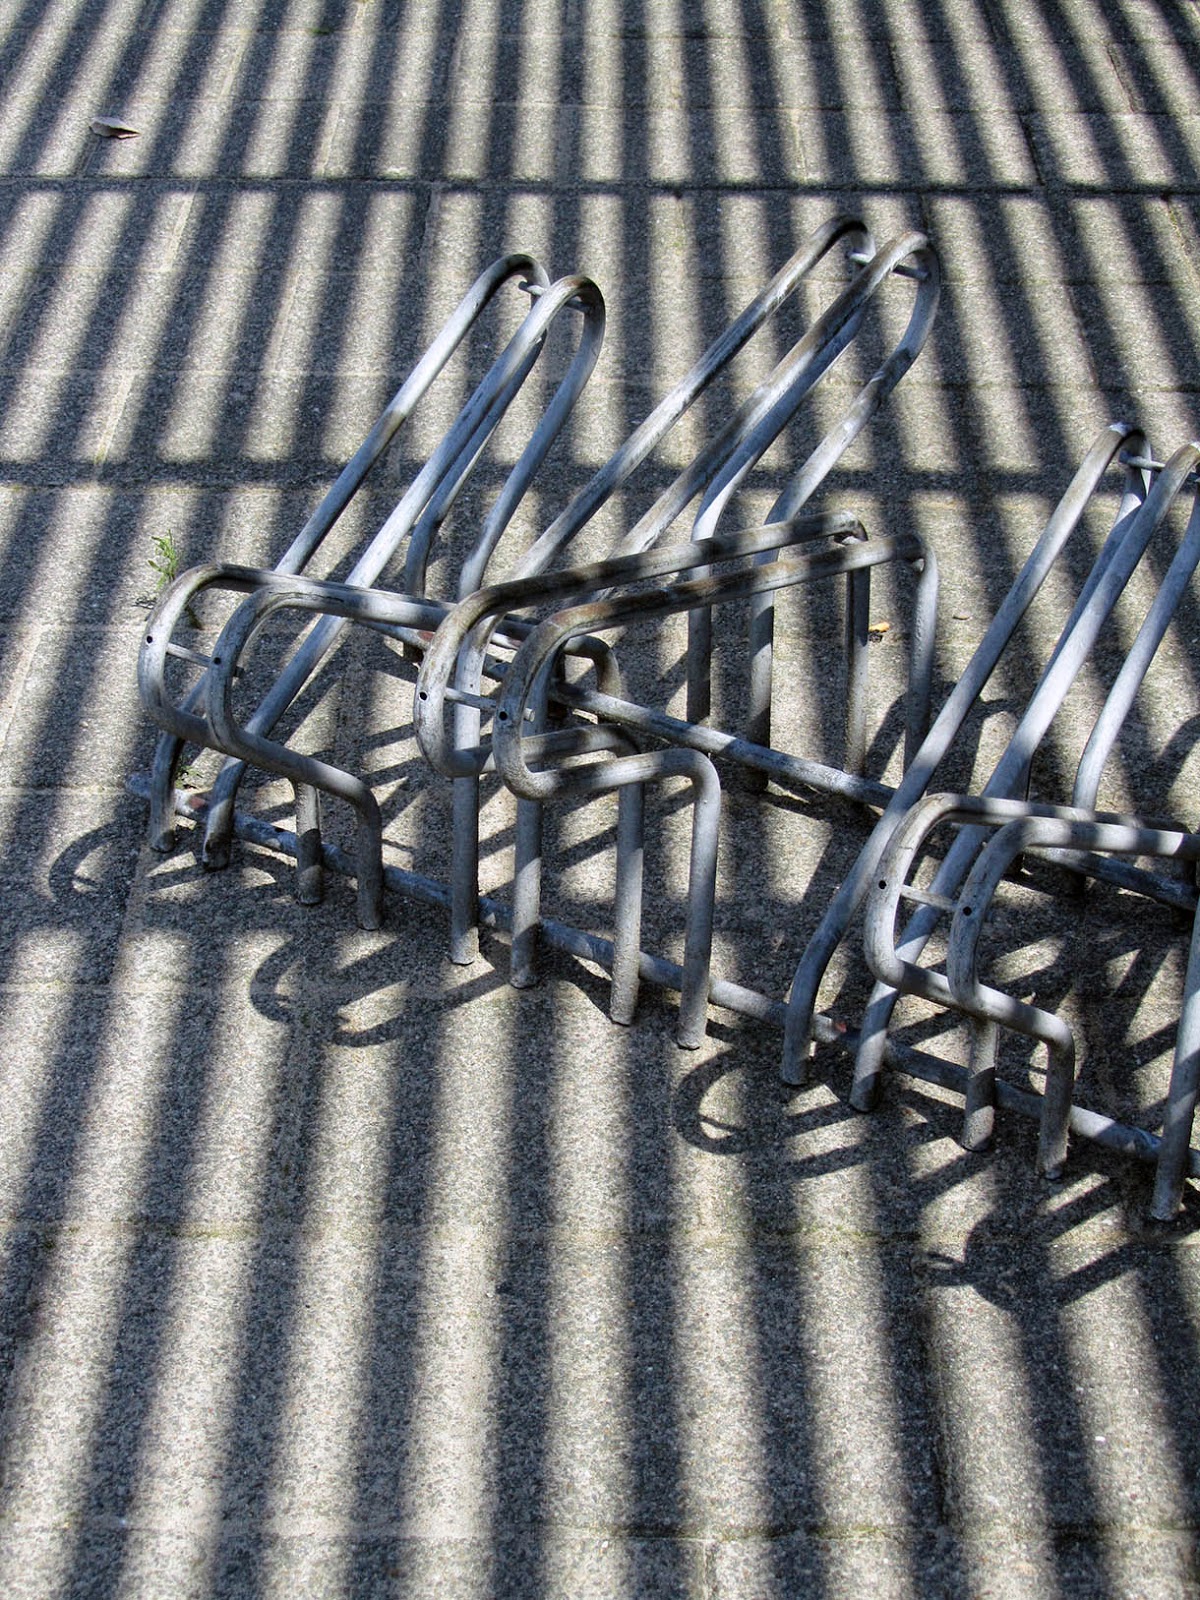 shadows on bicycle rack